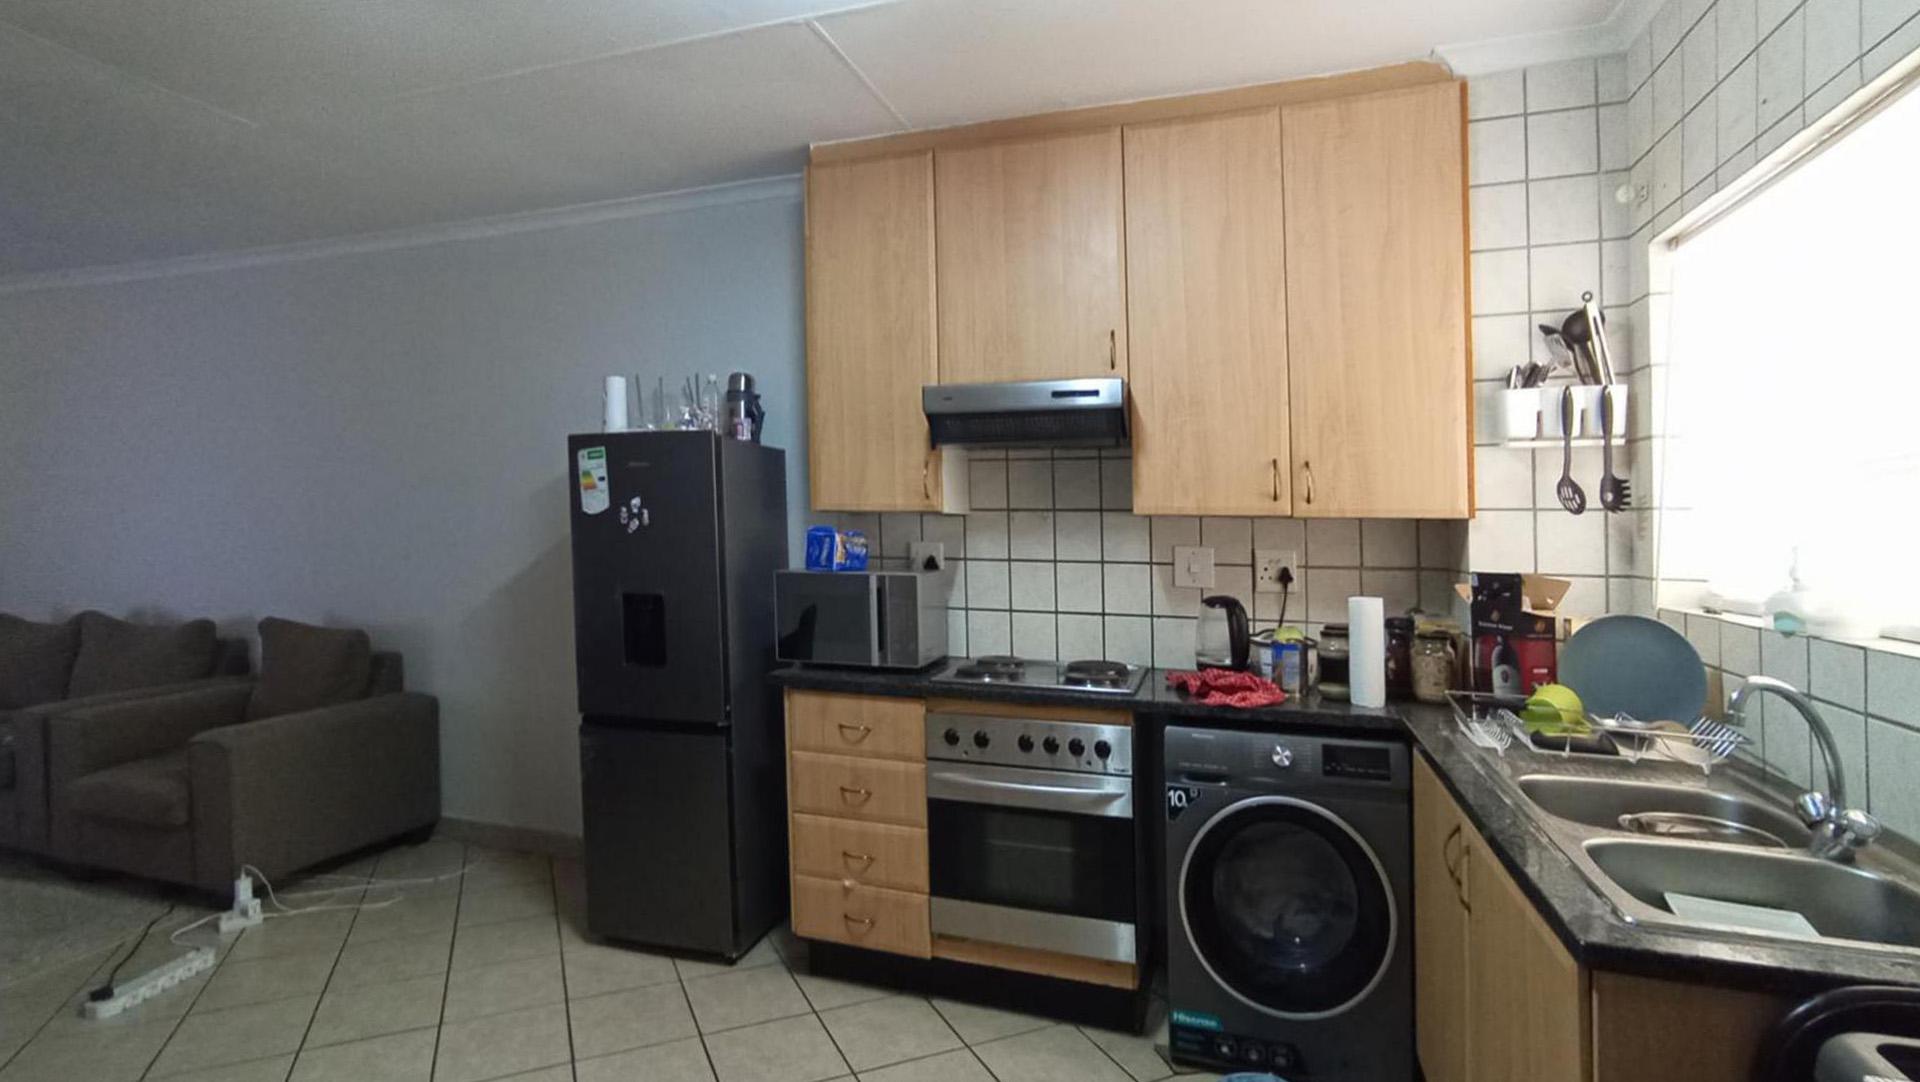 Kitchen - 12 square meters of property in Tijger Vallei